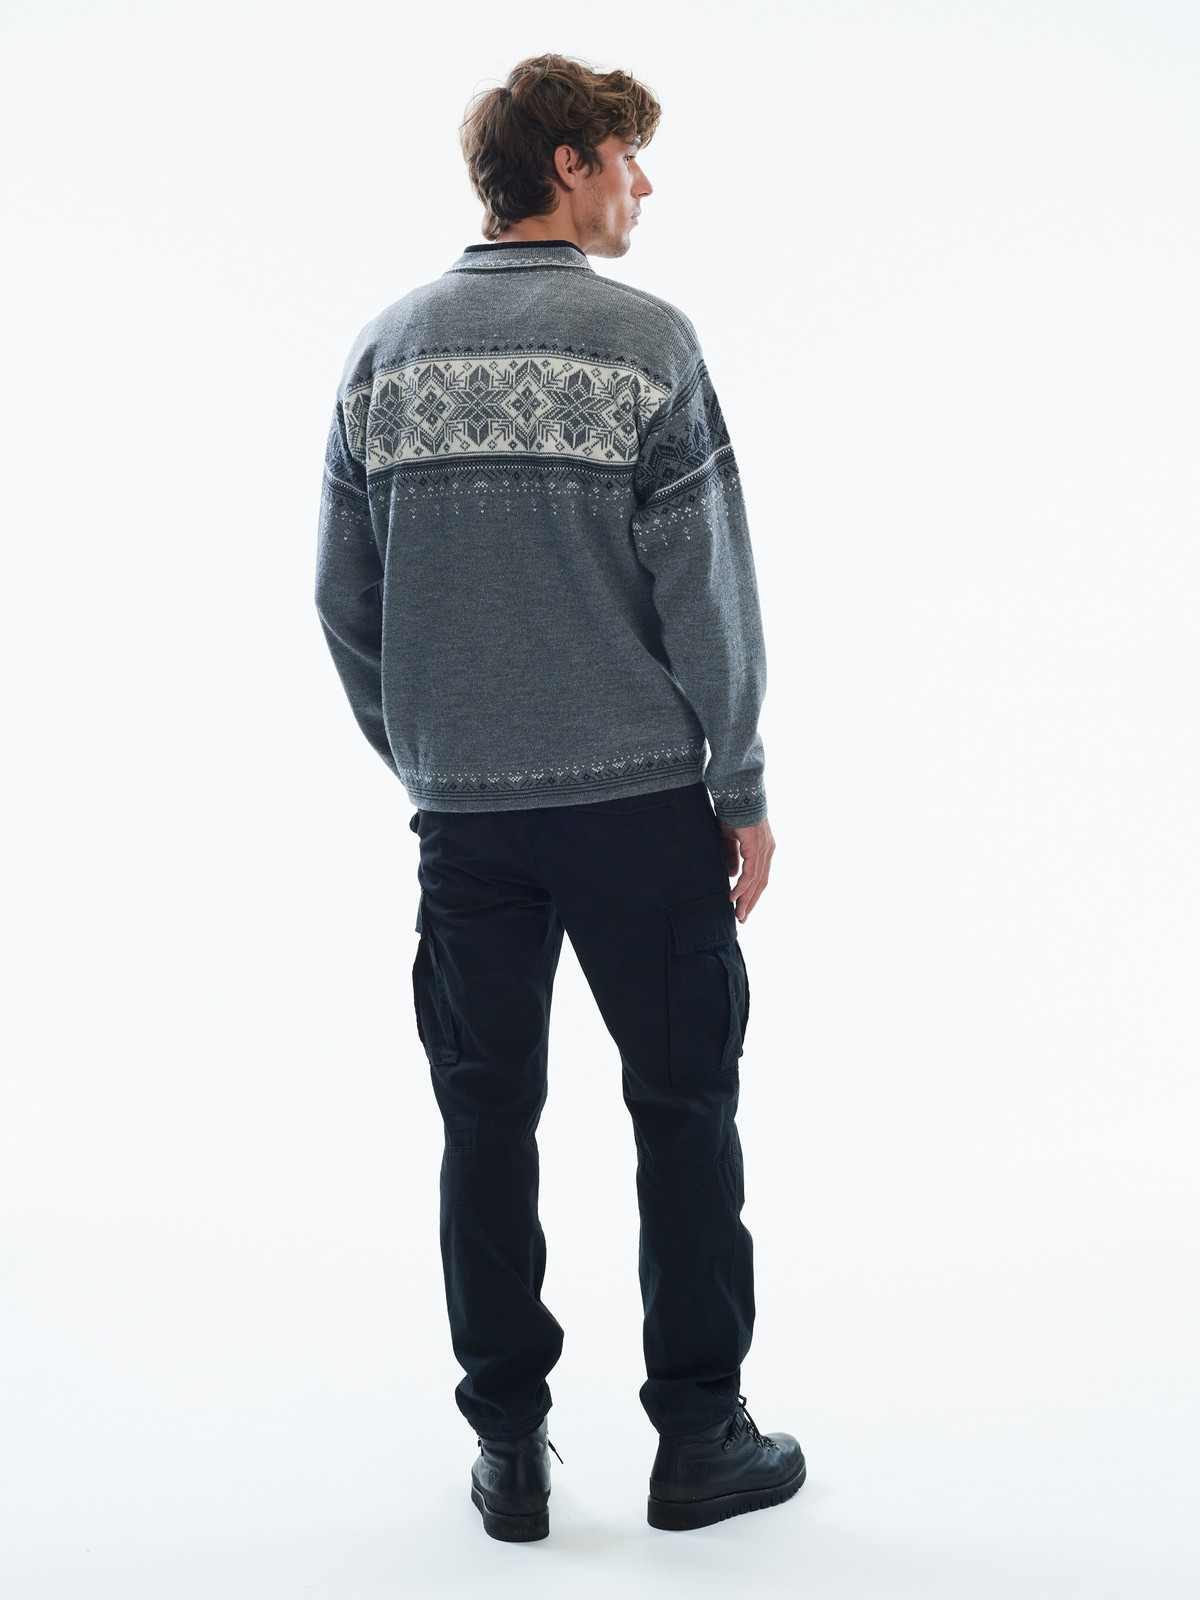 Dale of Norway Blyfjell Unisex Sweater,  Smoke/Dark Charcoal/Off White, 95021E